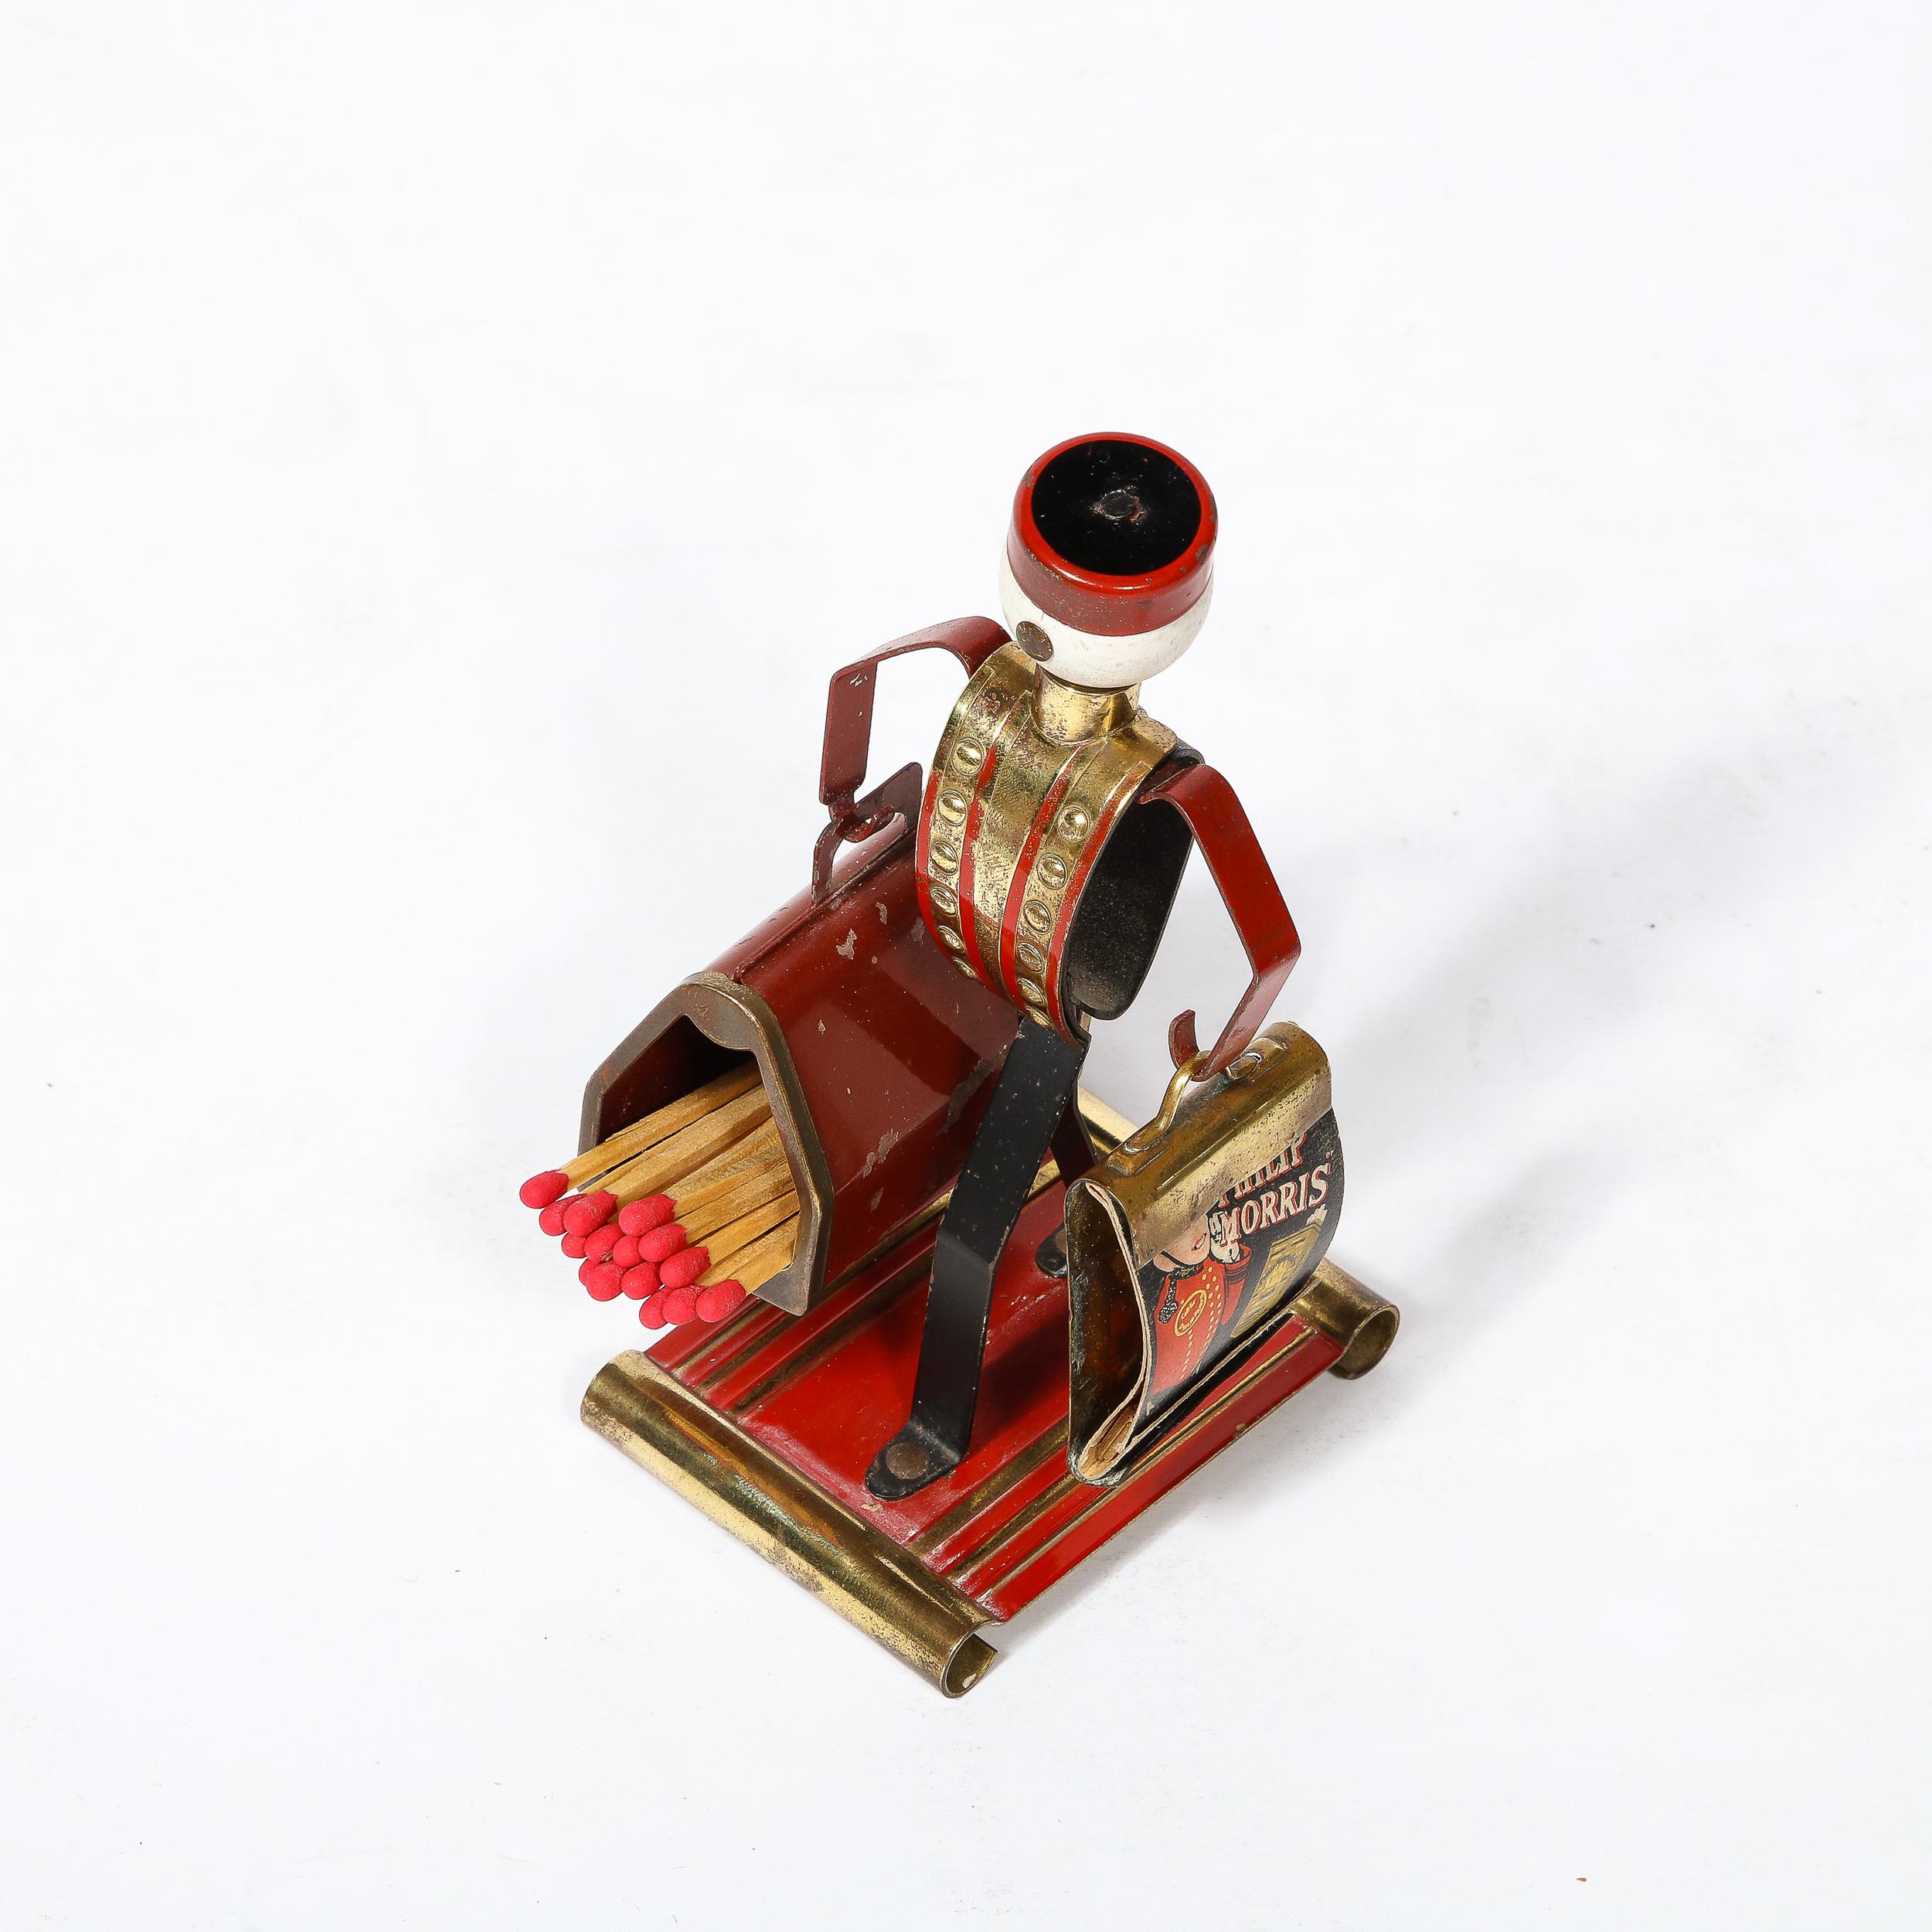 Art Deco Bellhop Figurine Cigarette Holder in Brass and Enamel by Philip Morris 6